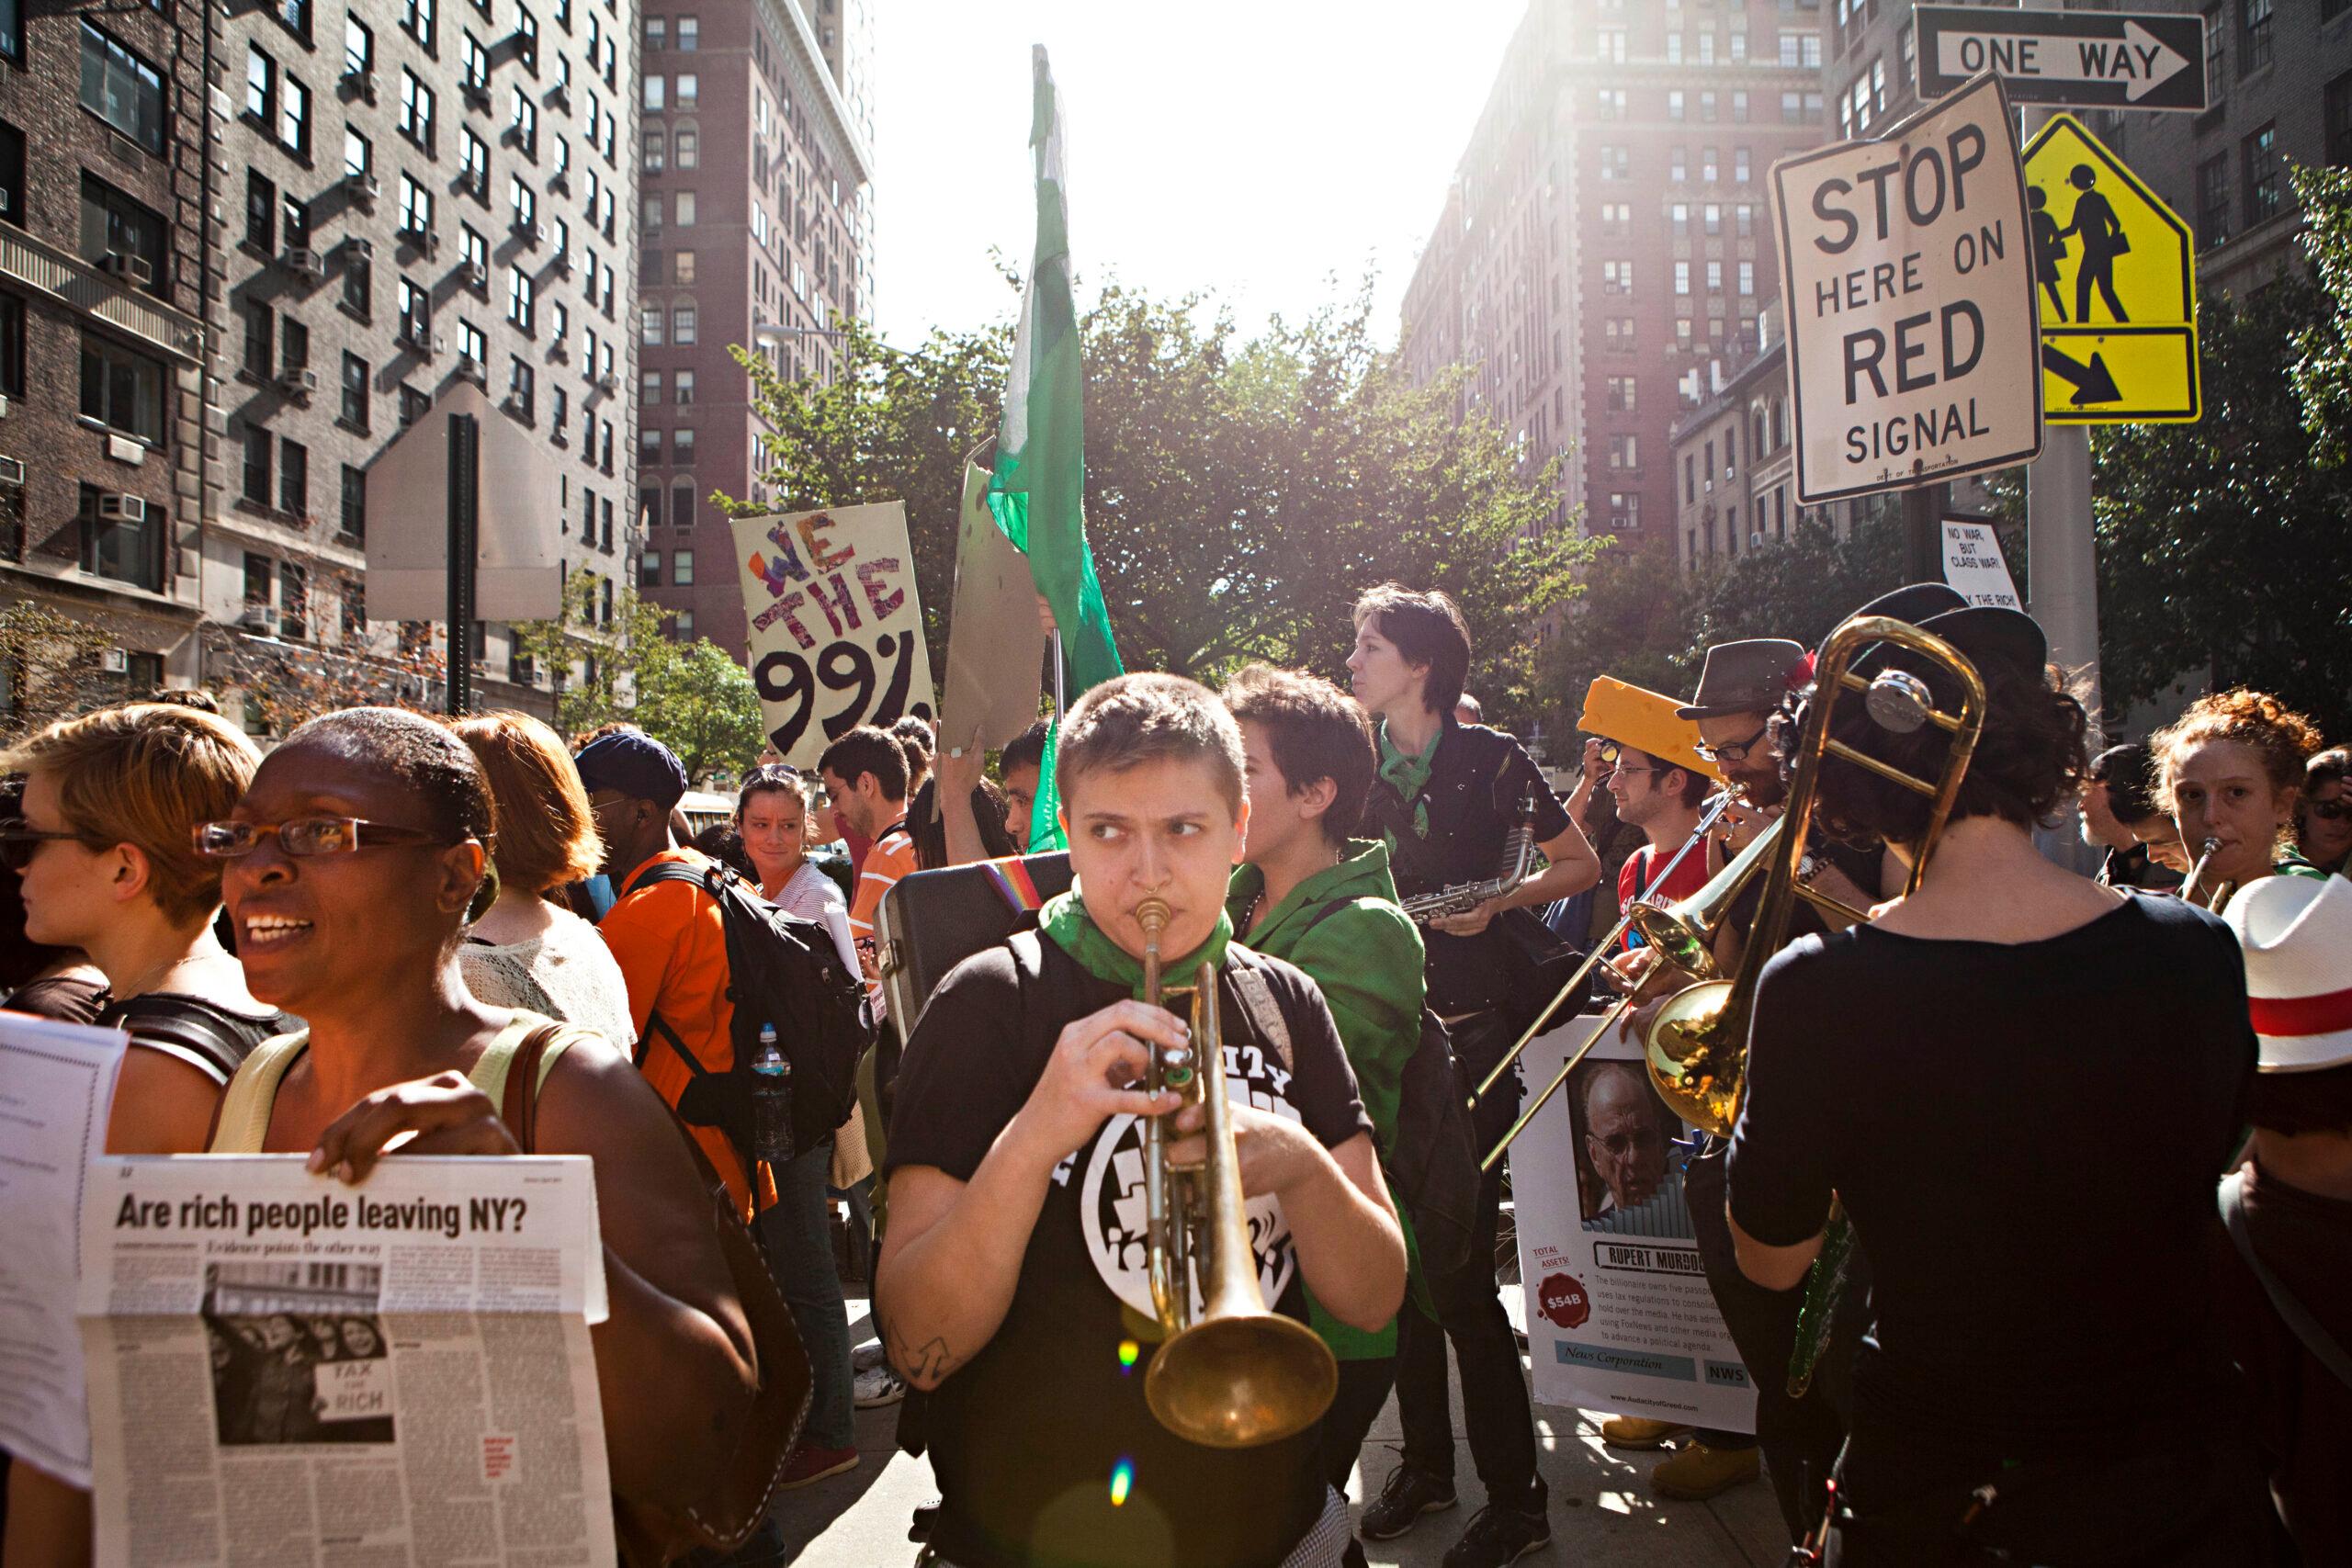 Protesta “Ocupa Wall Street” frente a casas de multimillonarios en NY